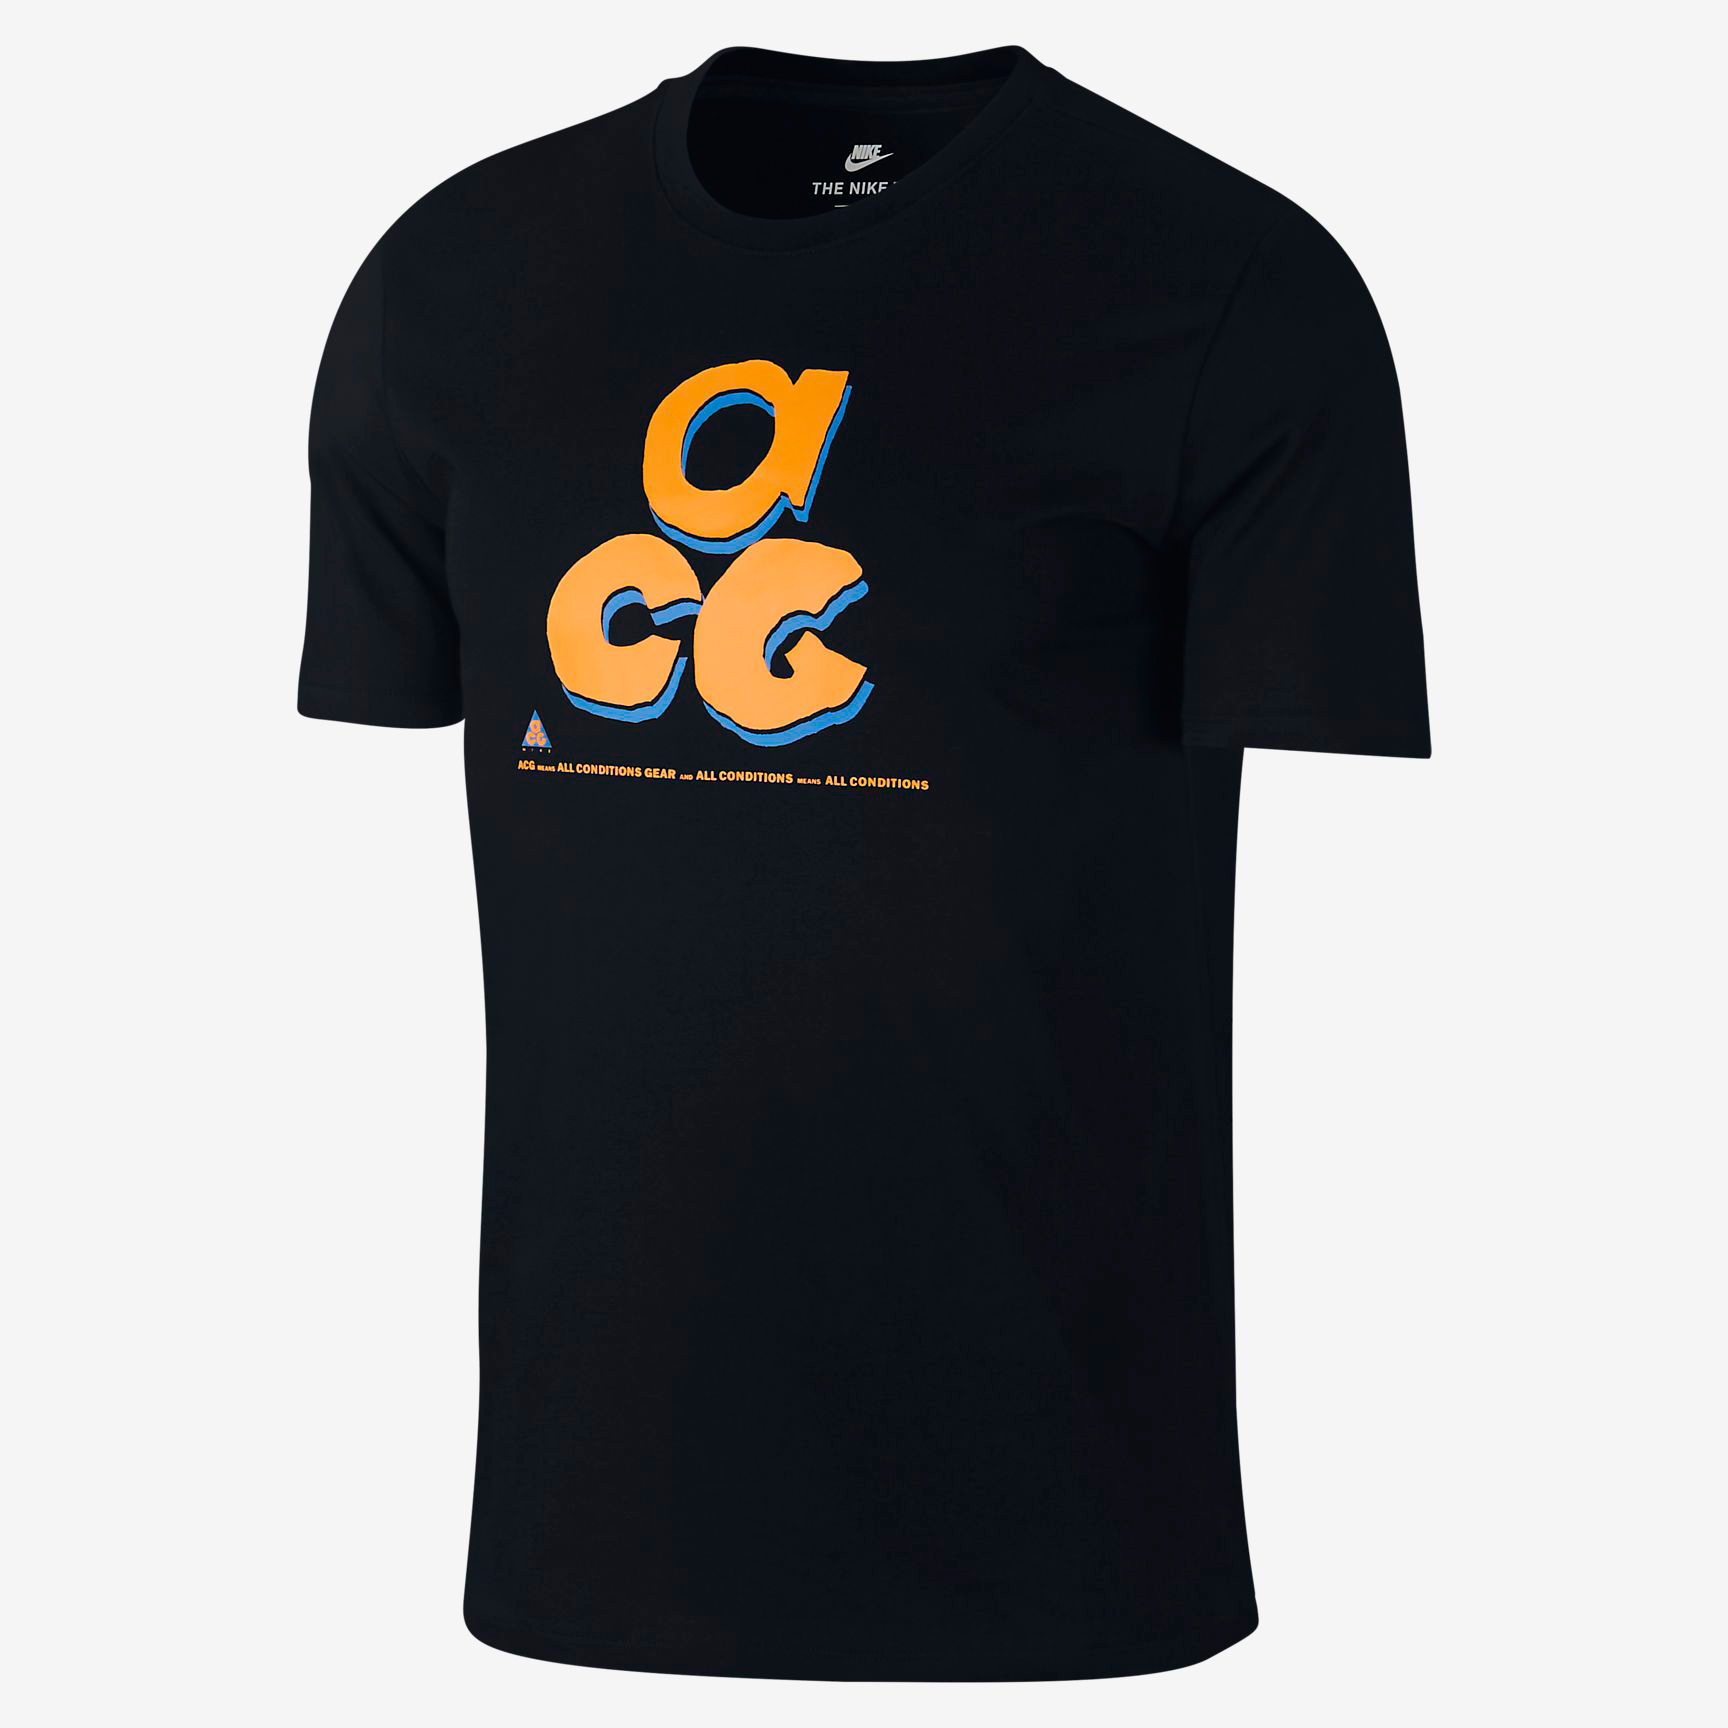 nike-acg-shirt-black-orange